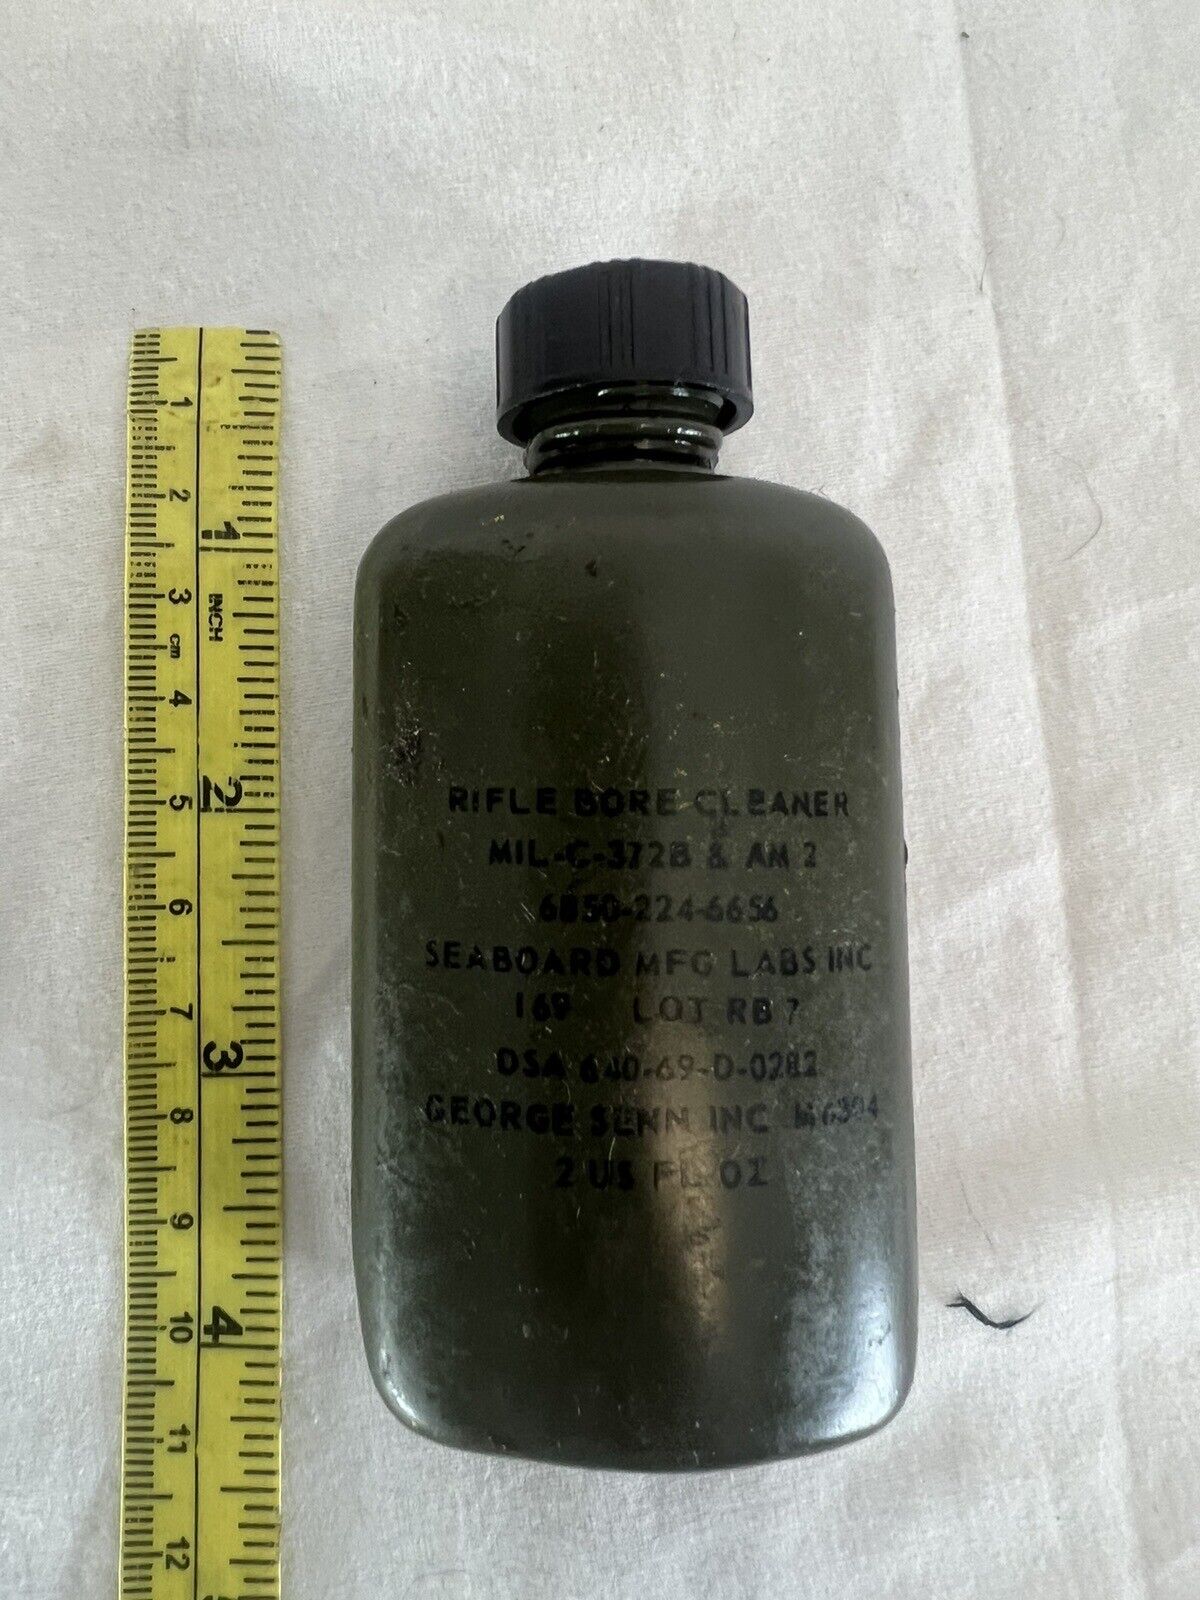 Vietnam War Era US Army Oil Bottle (Empty) 1969